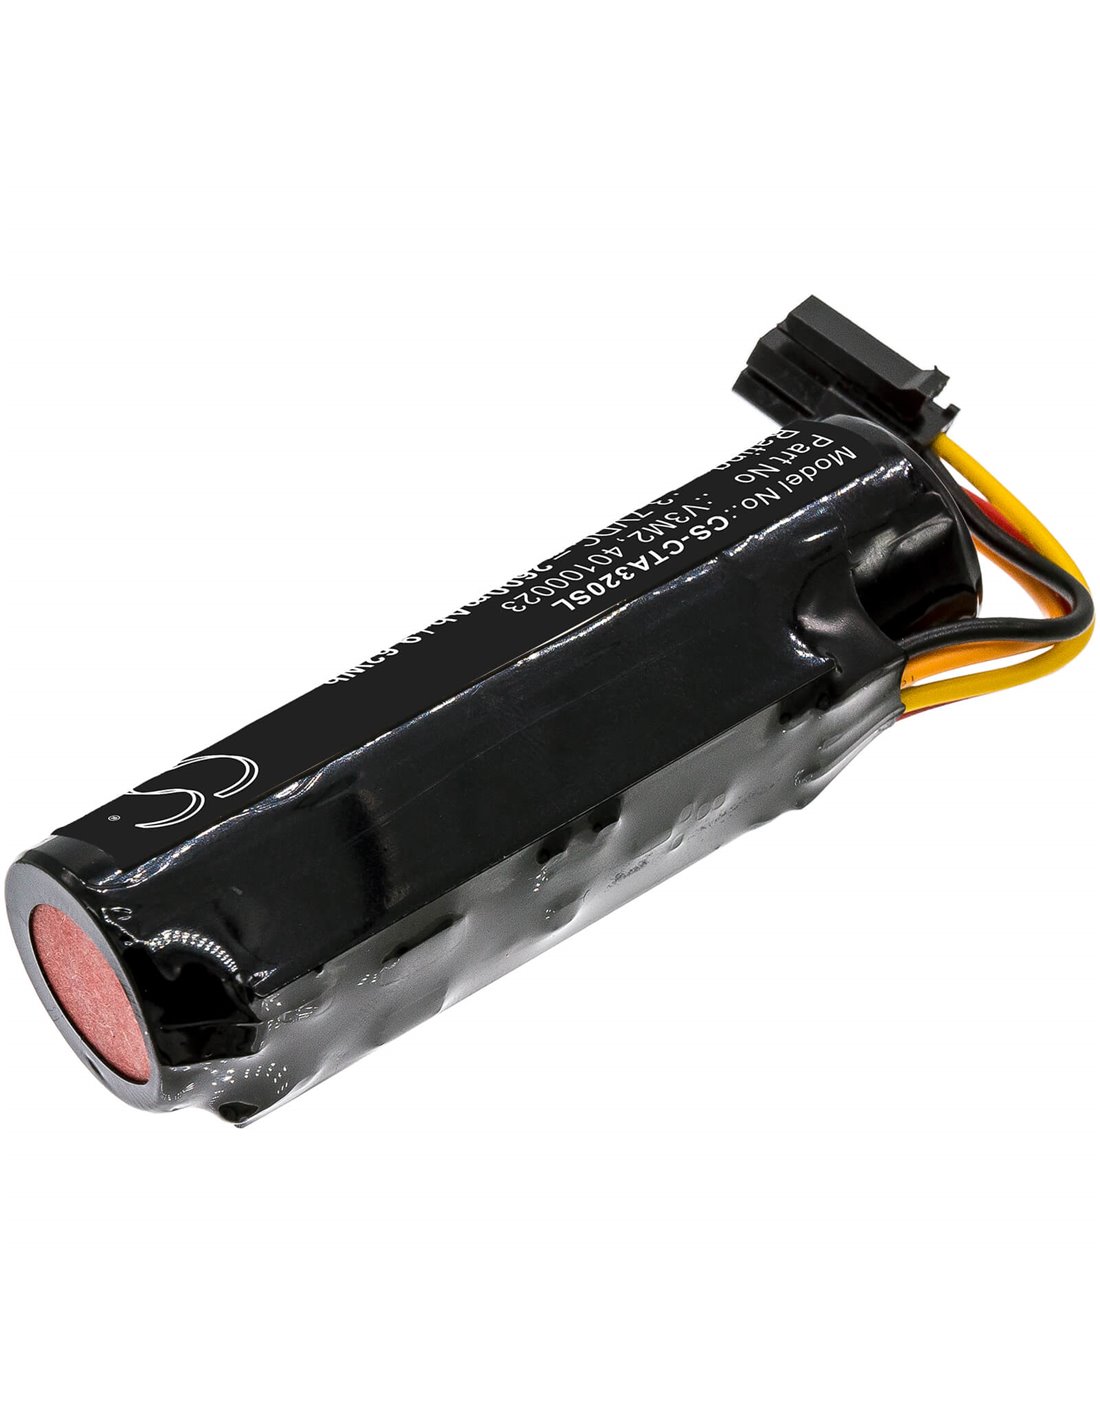 3.7V, 2600mAh, Li-ion Battery fits Dejavoo, Z9 Black, Z9 V4, 9.62Wh